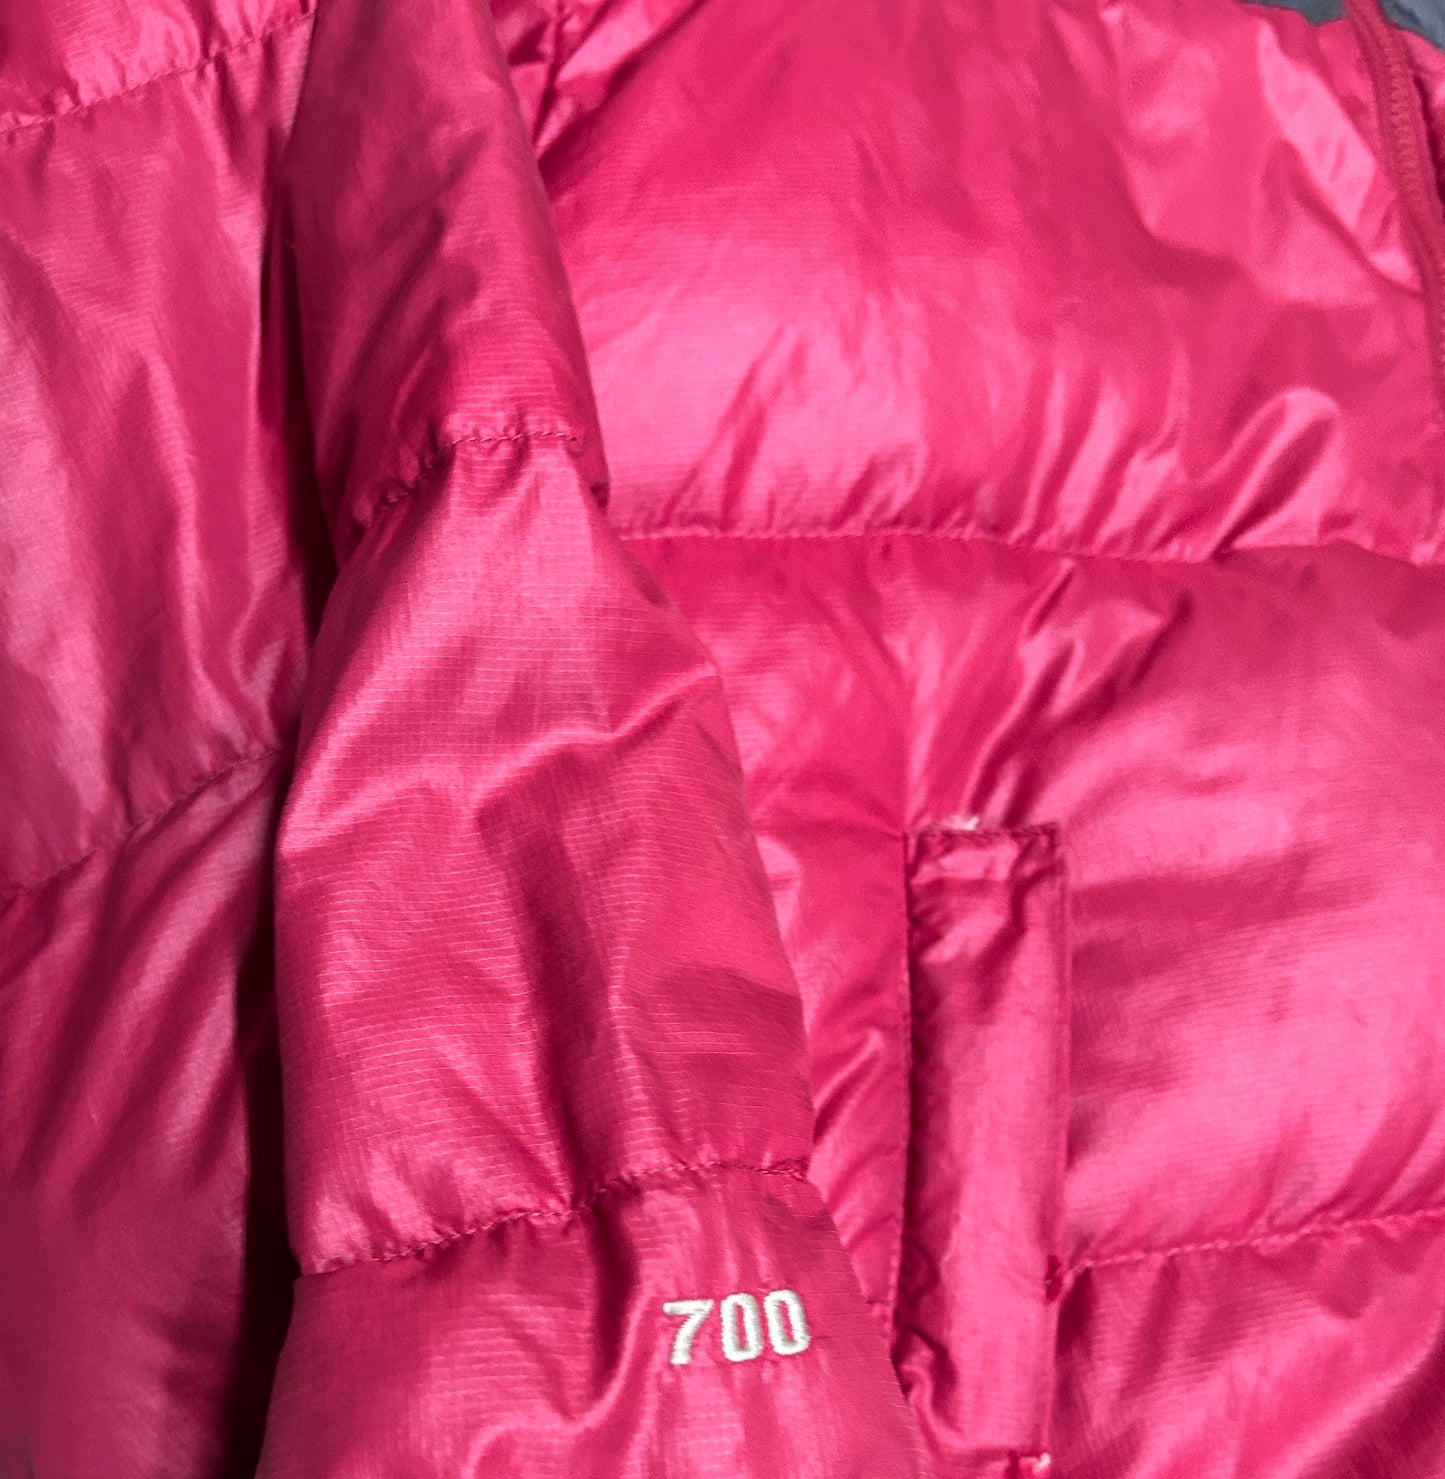 Vintage North Face 700 Puffer Jacket - M